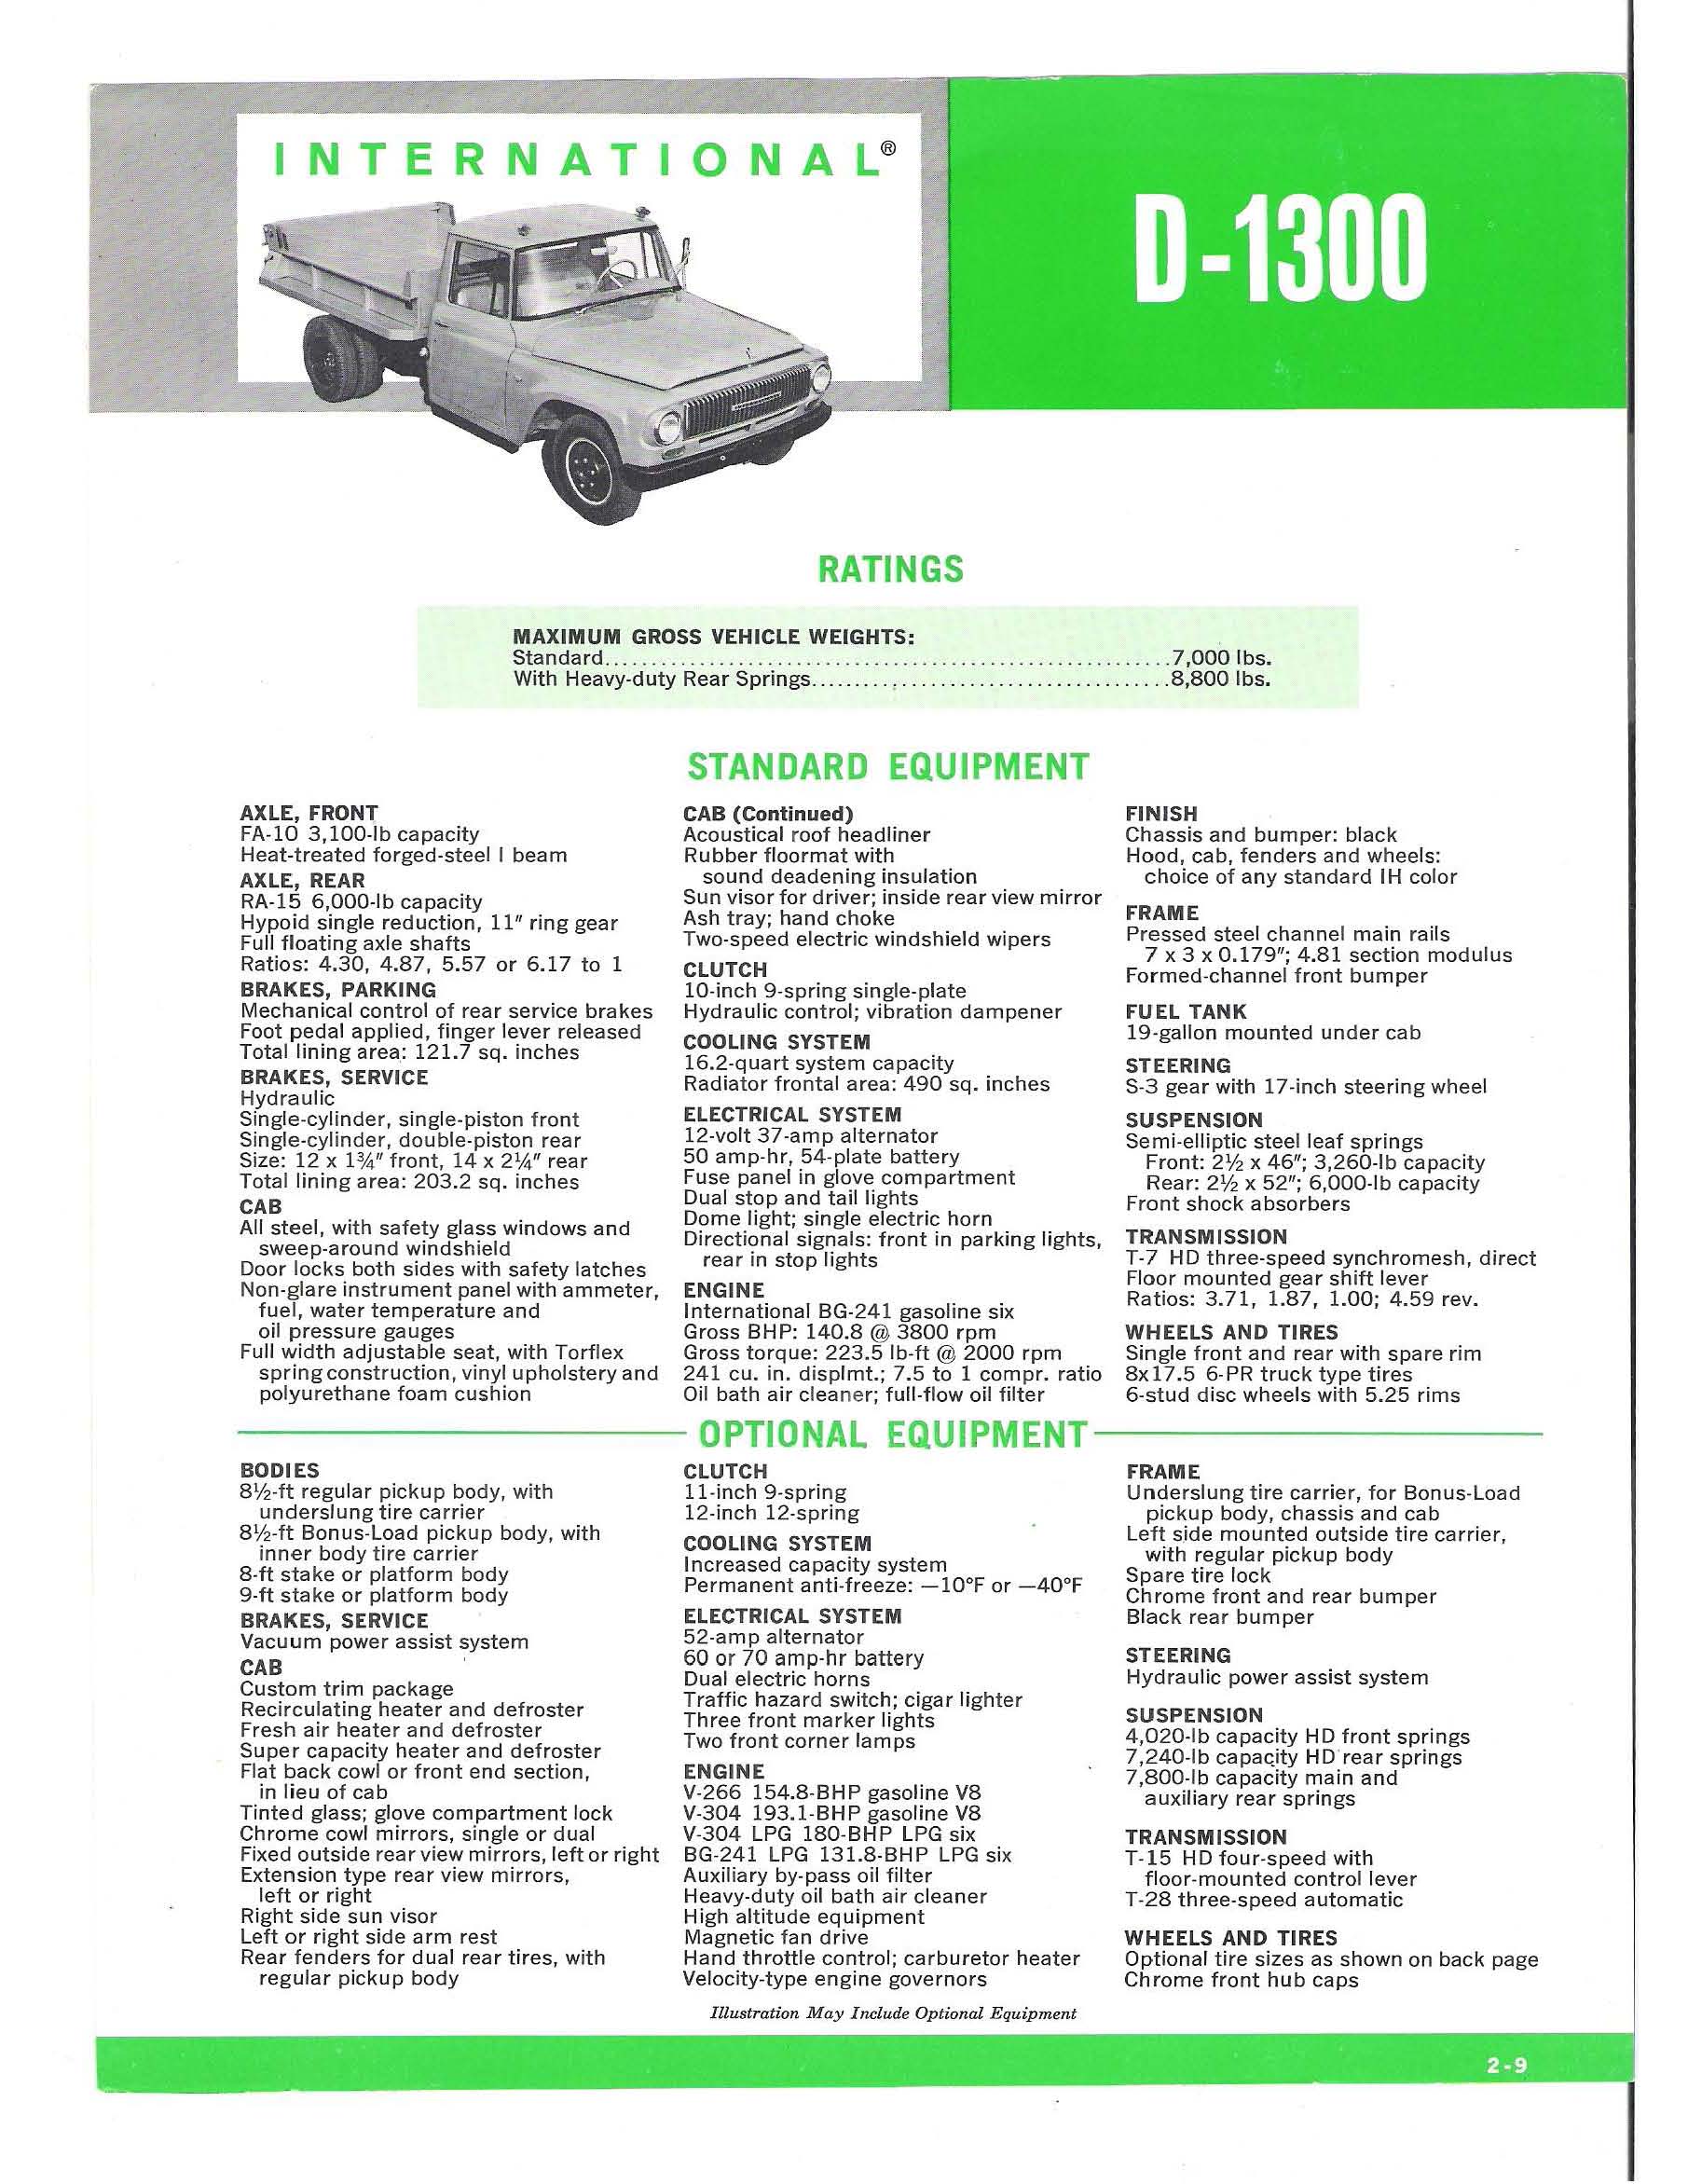 1965 International D-1300 Series Folder Page 1